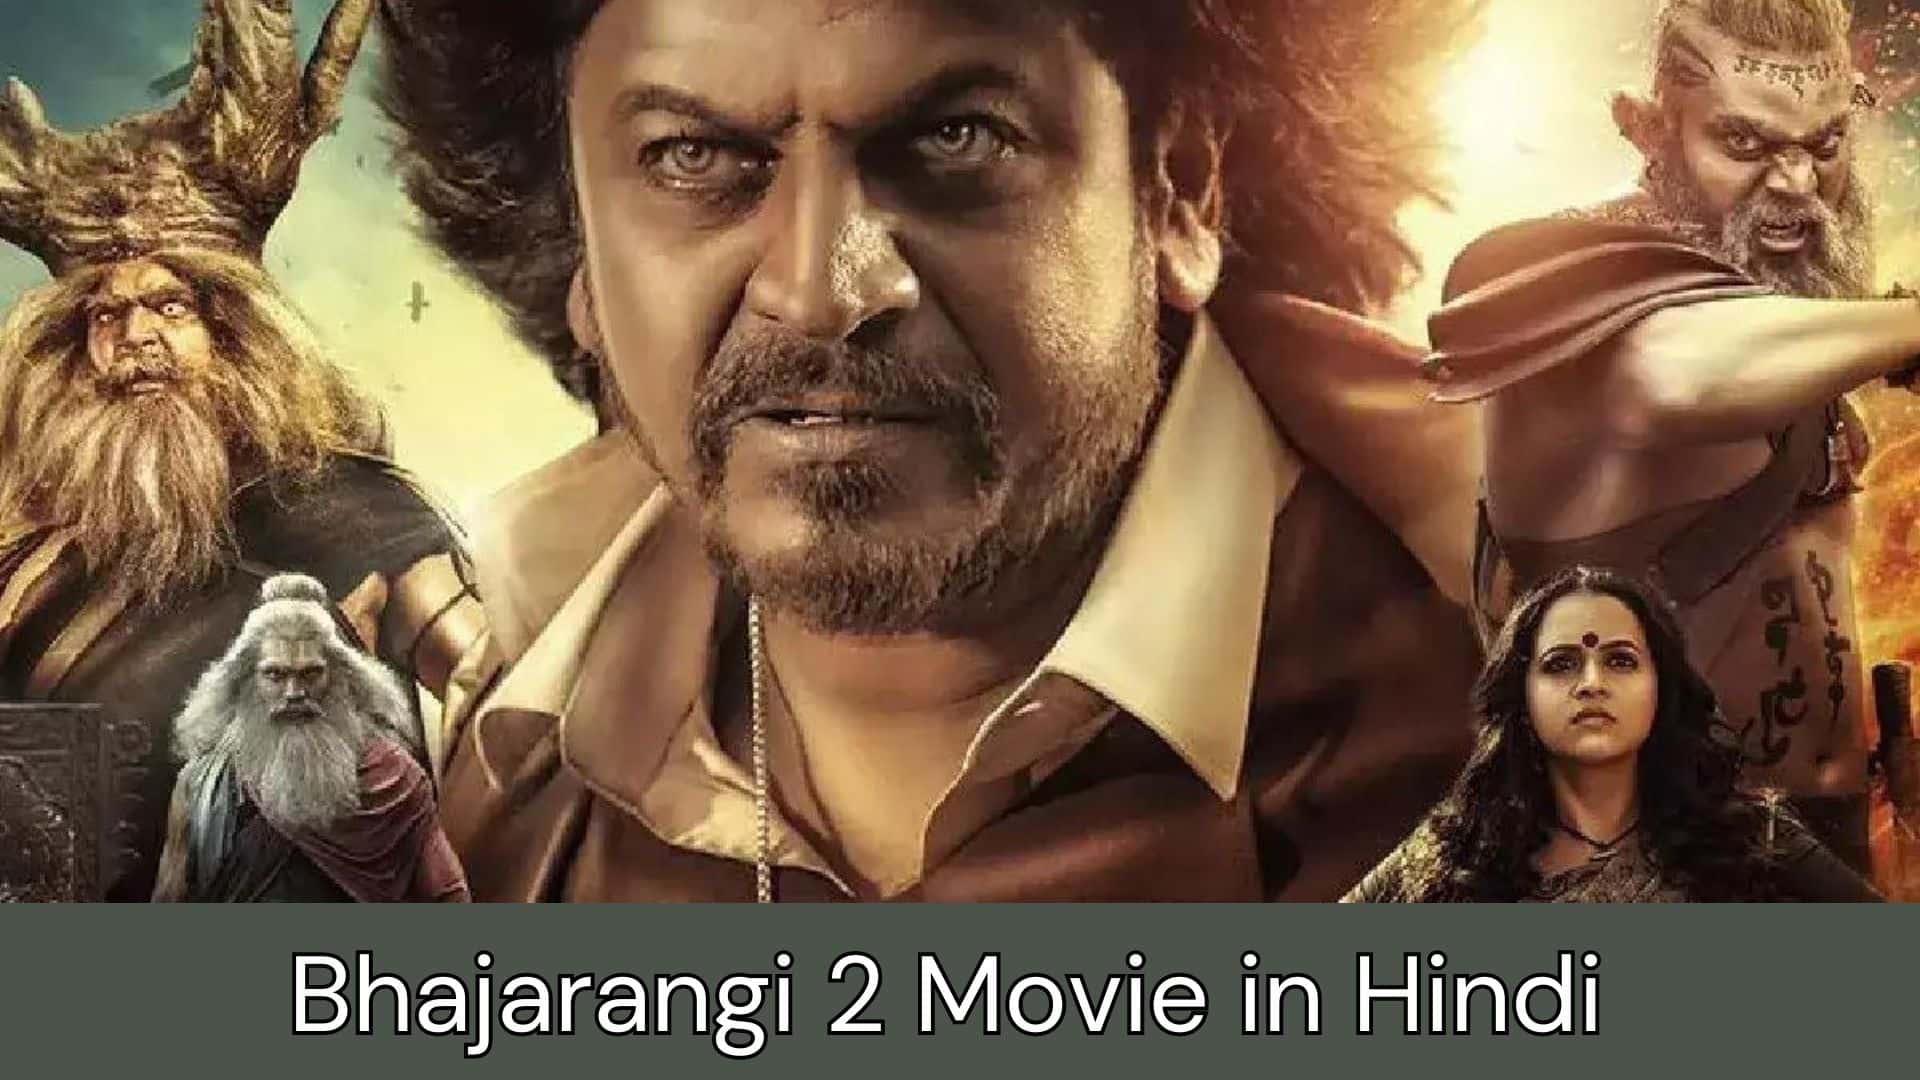 Bhajarangi 2 Movie Cast, Hero Name, Actress, Review